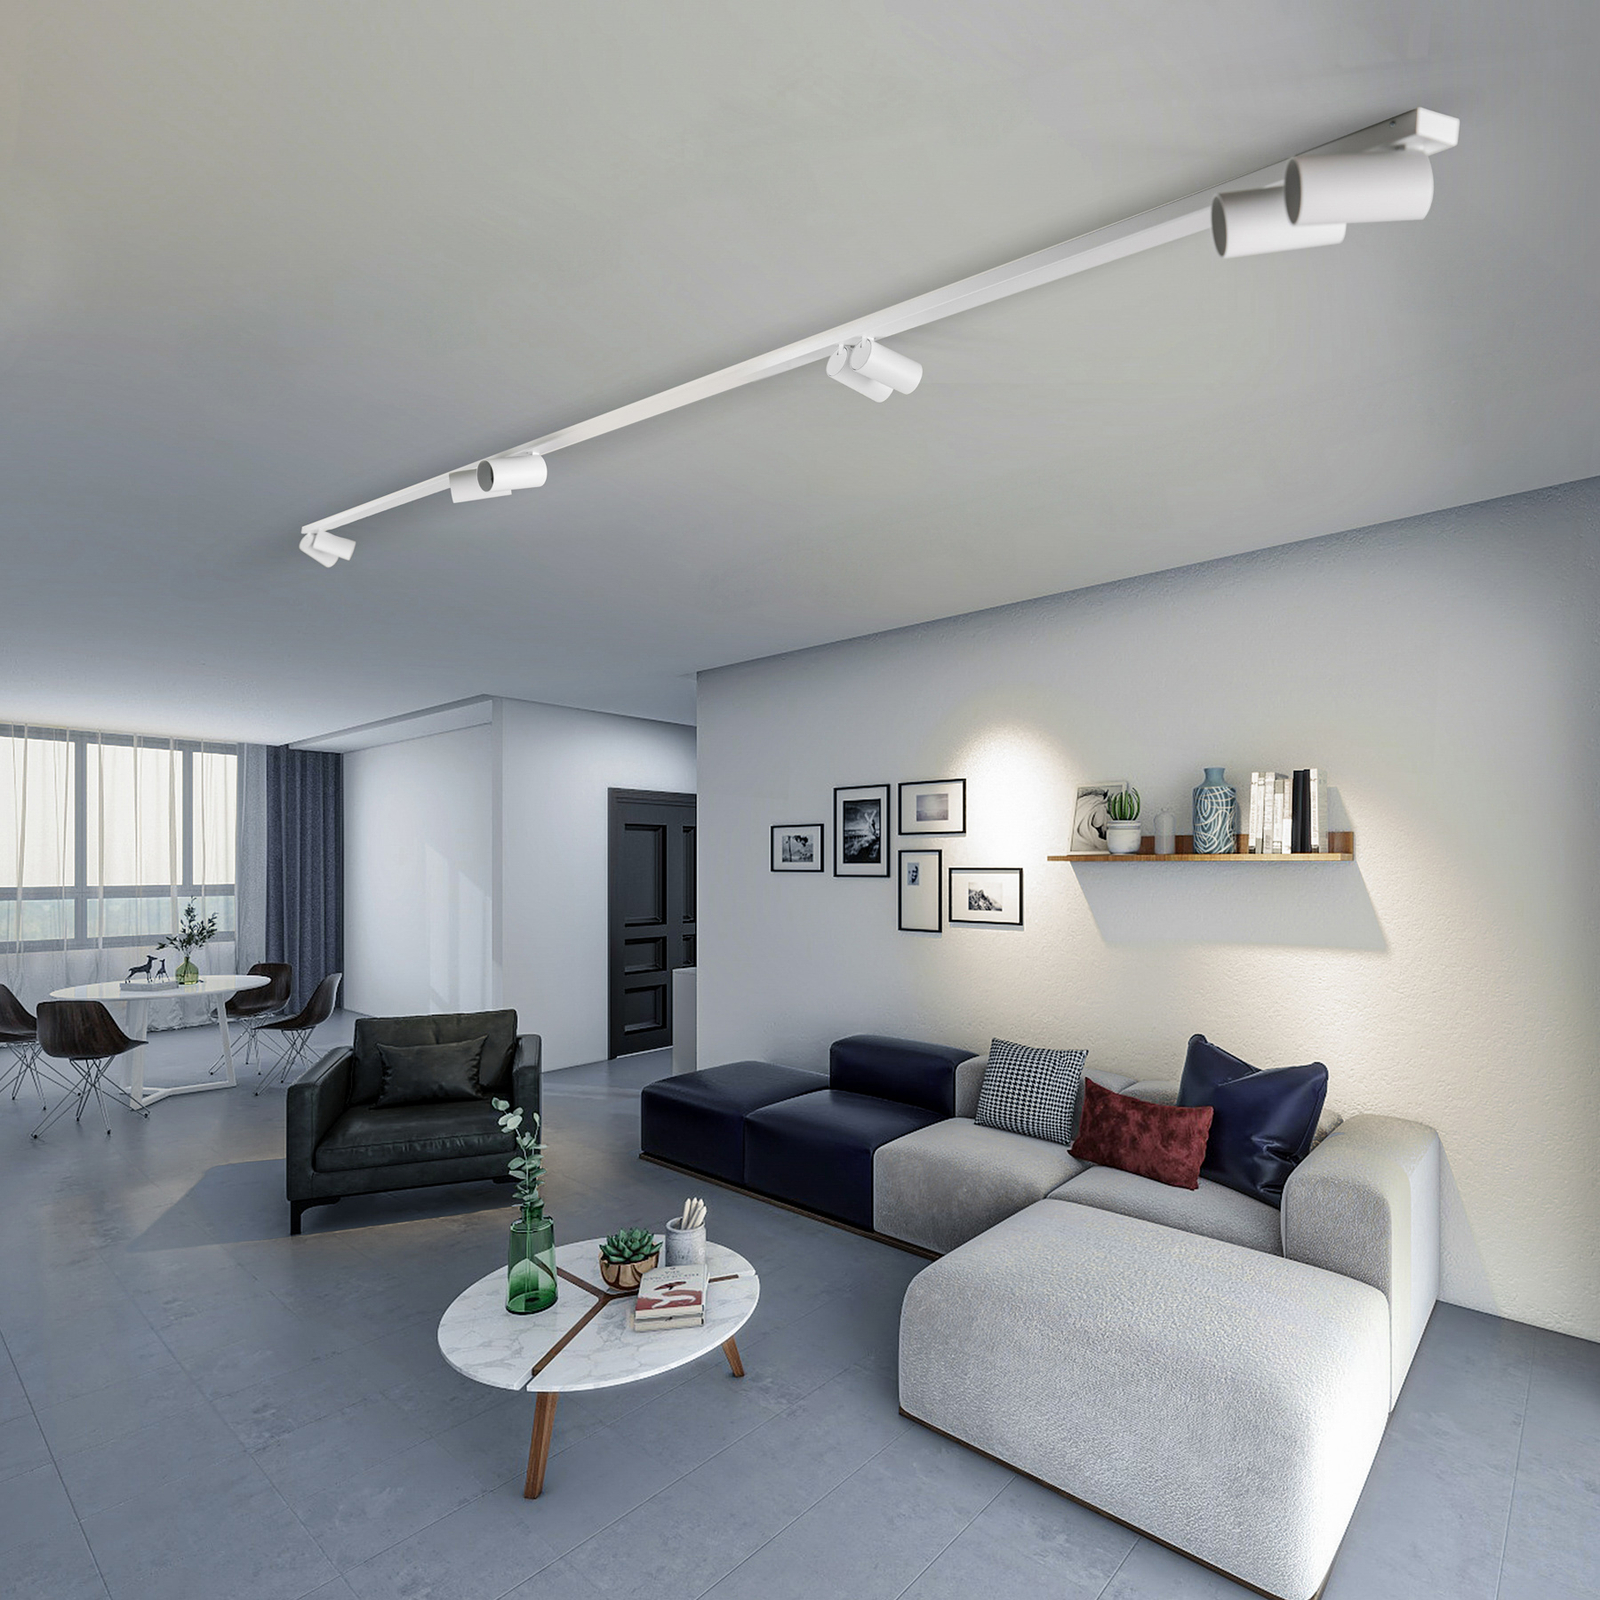 Mono VIII ceiling spotlight white 8-bulb, 2x200 cm